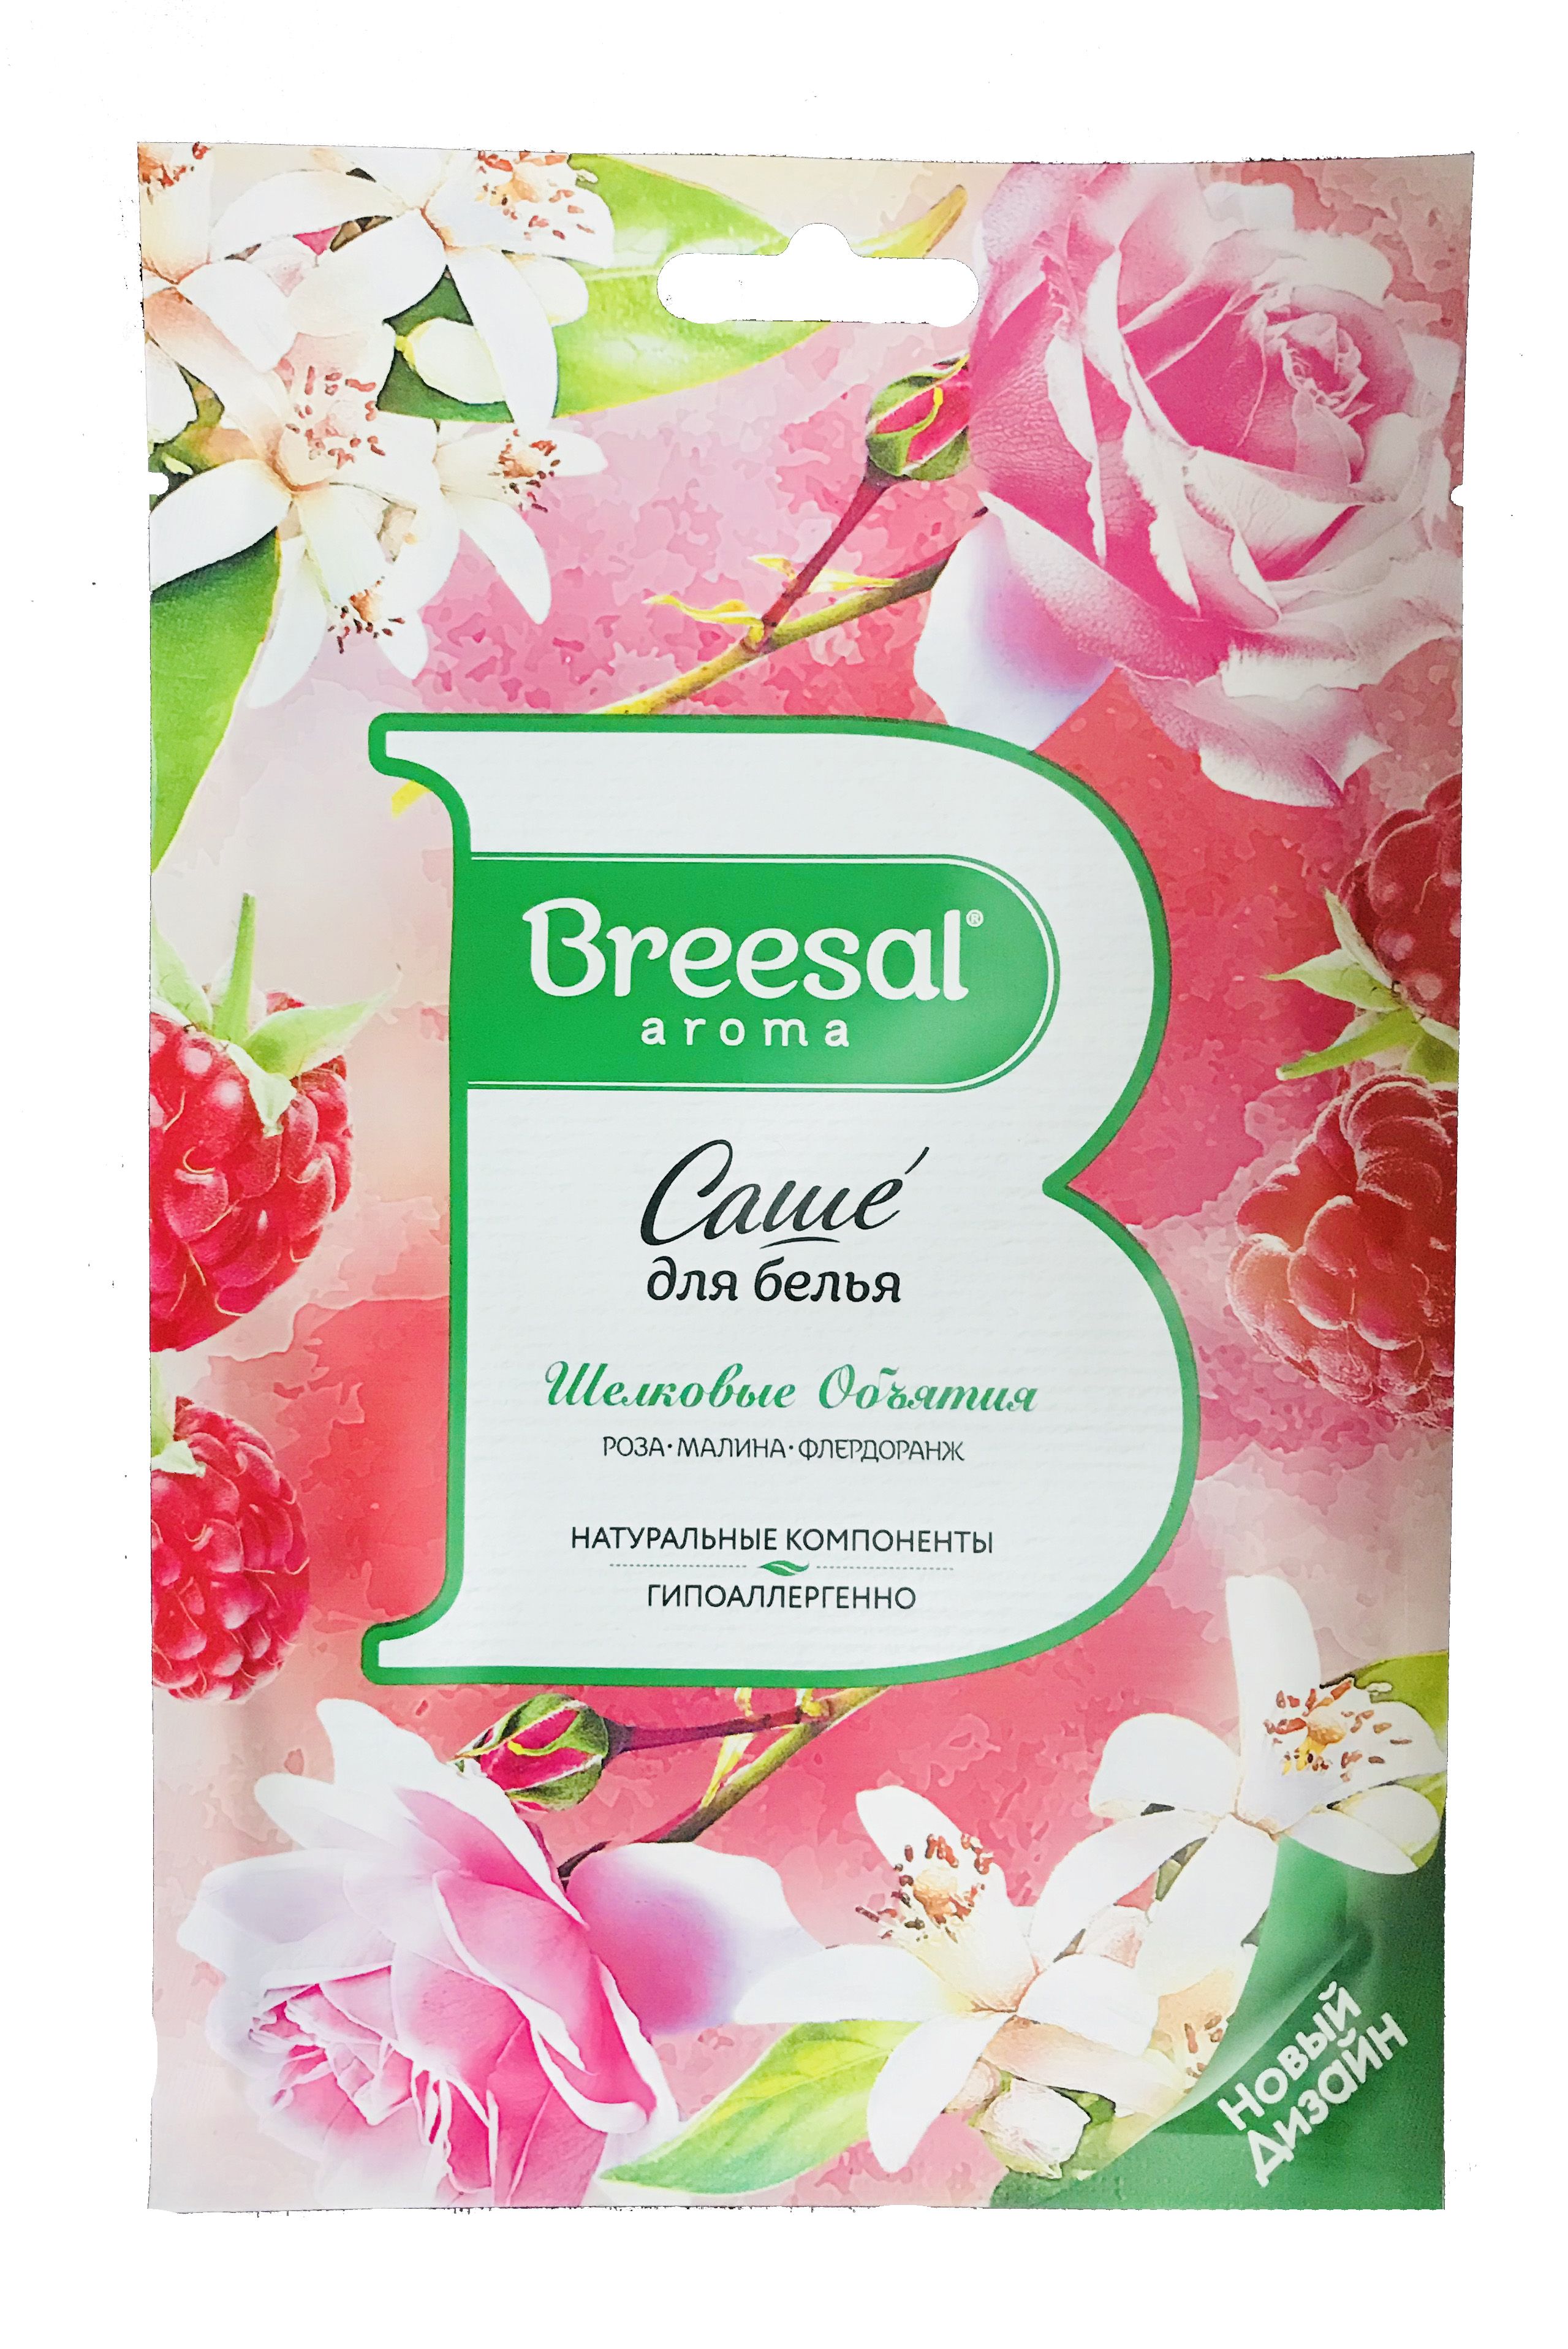 Breesal Ароматическое саше для белья Шелковые объятия 20 гр  роза,малина, флердоранж